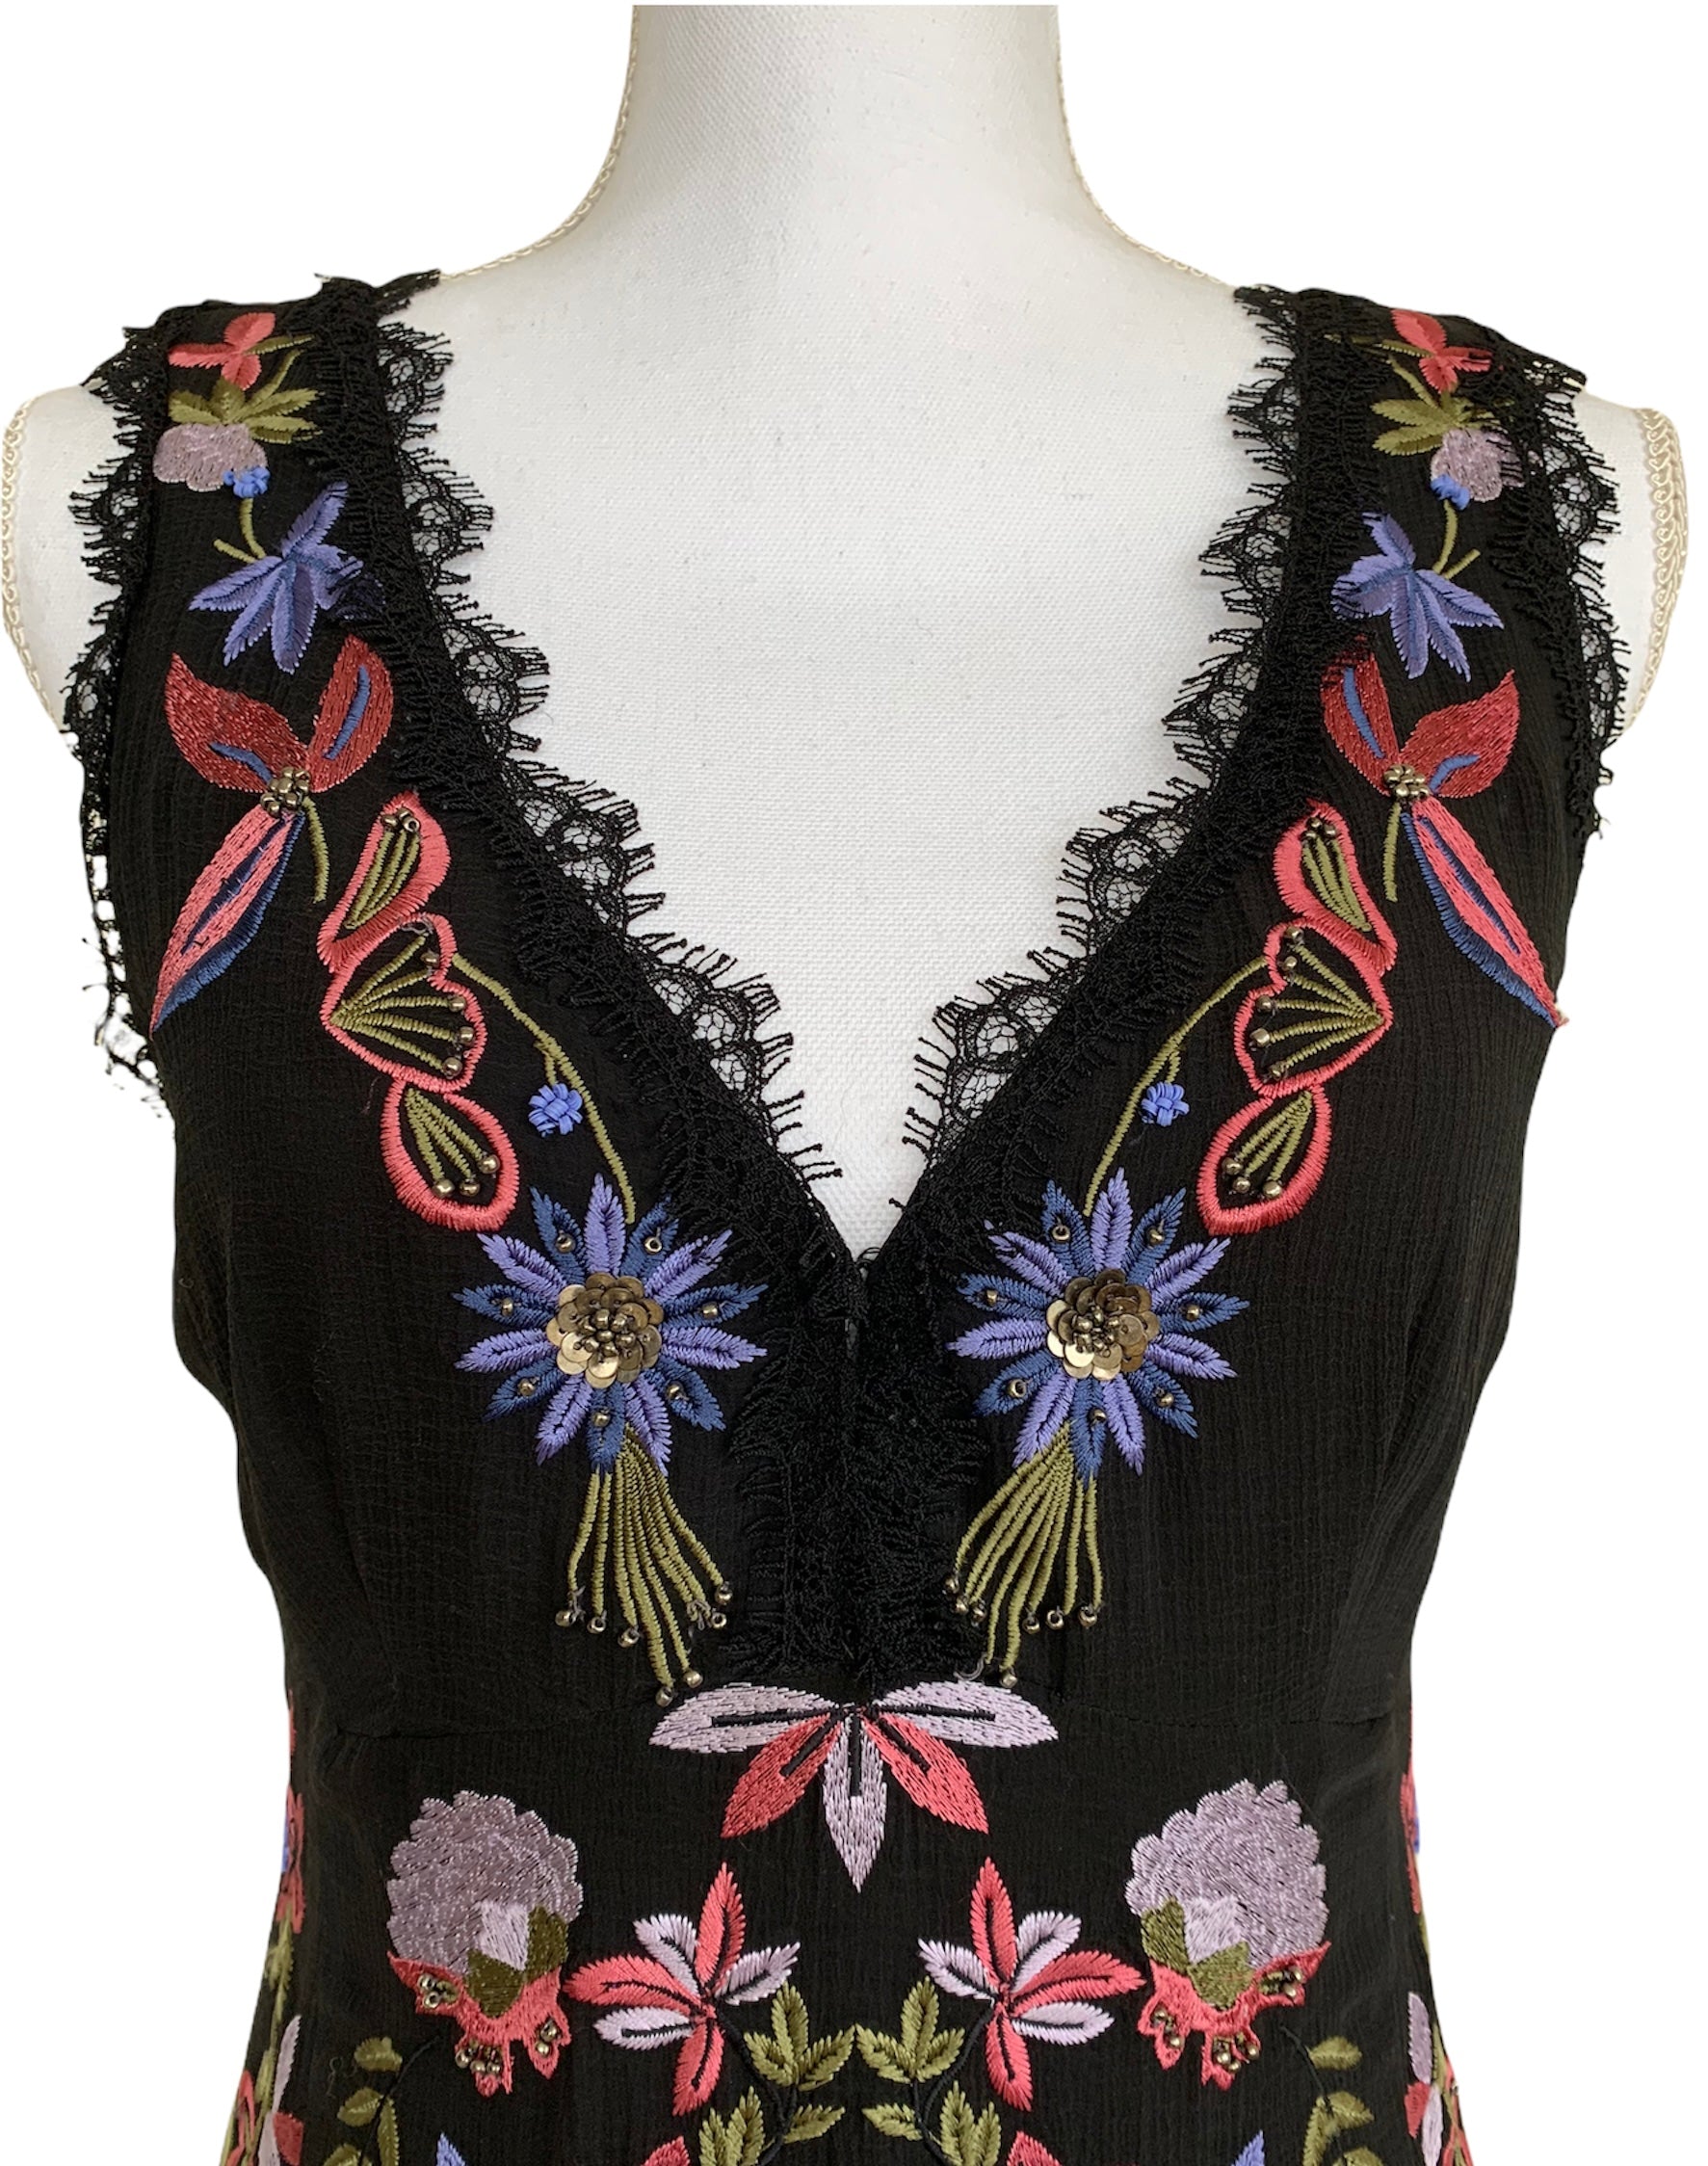 Nanette Lepore Embroidered Dress, 2